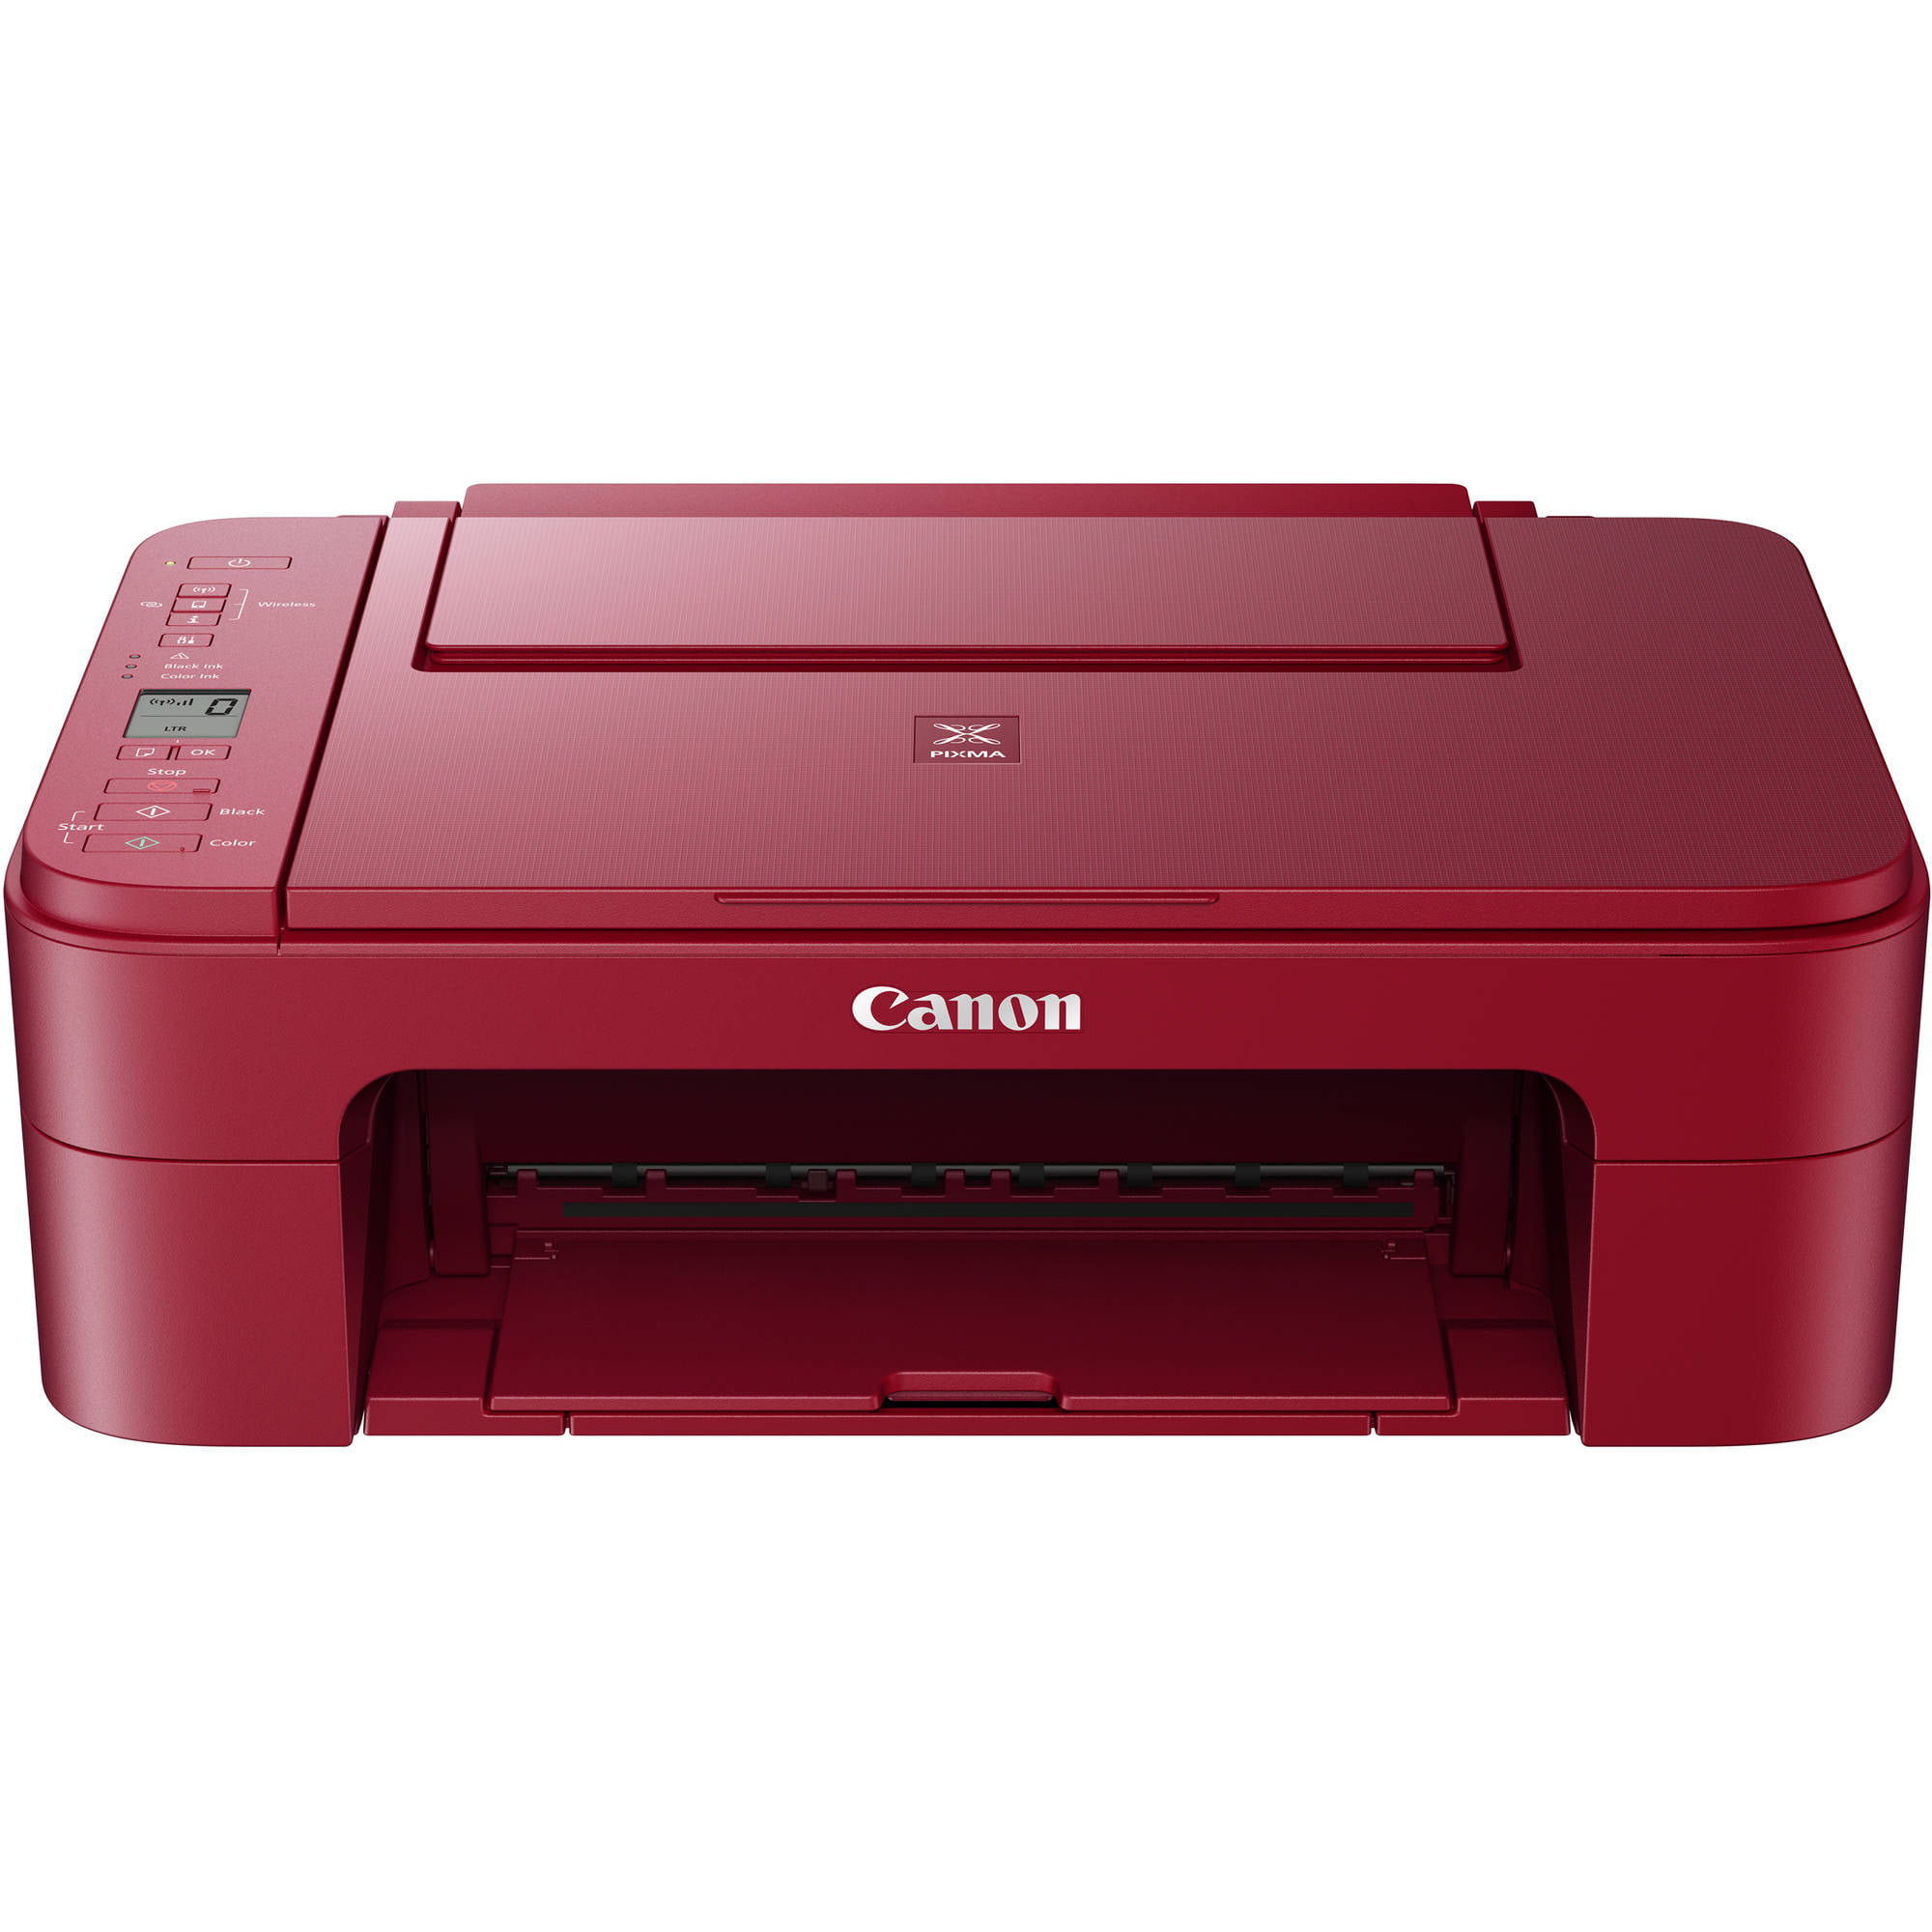 Максимальное разрешение сканера. Canon PIXMA ts3350. Canon PIXMA ts6340. Принтер Canon PIXMA красный. Принтер Canon PIXMA mg3650s.